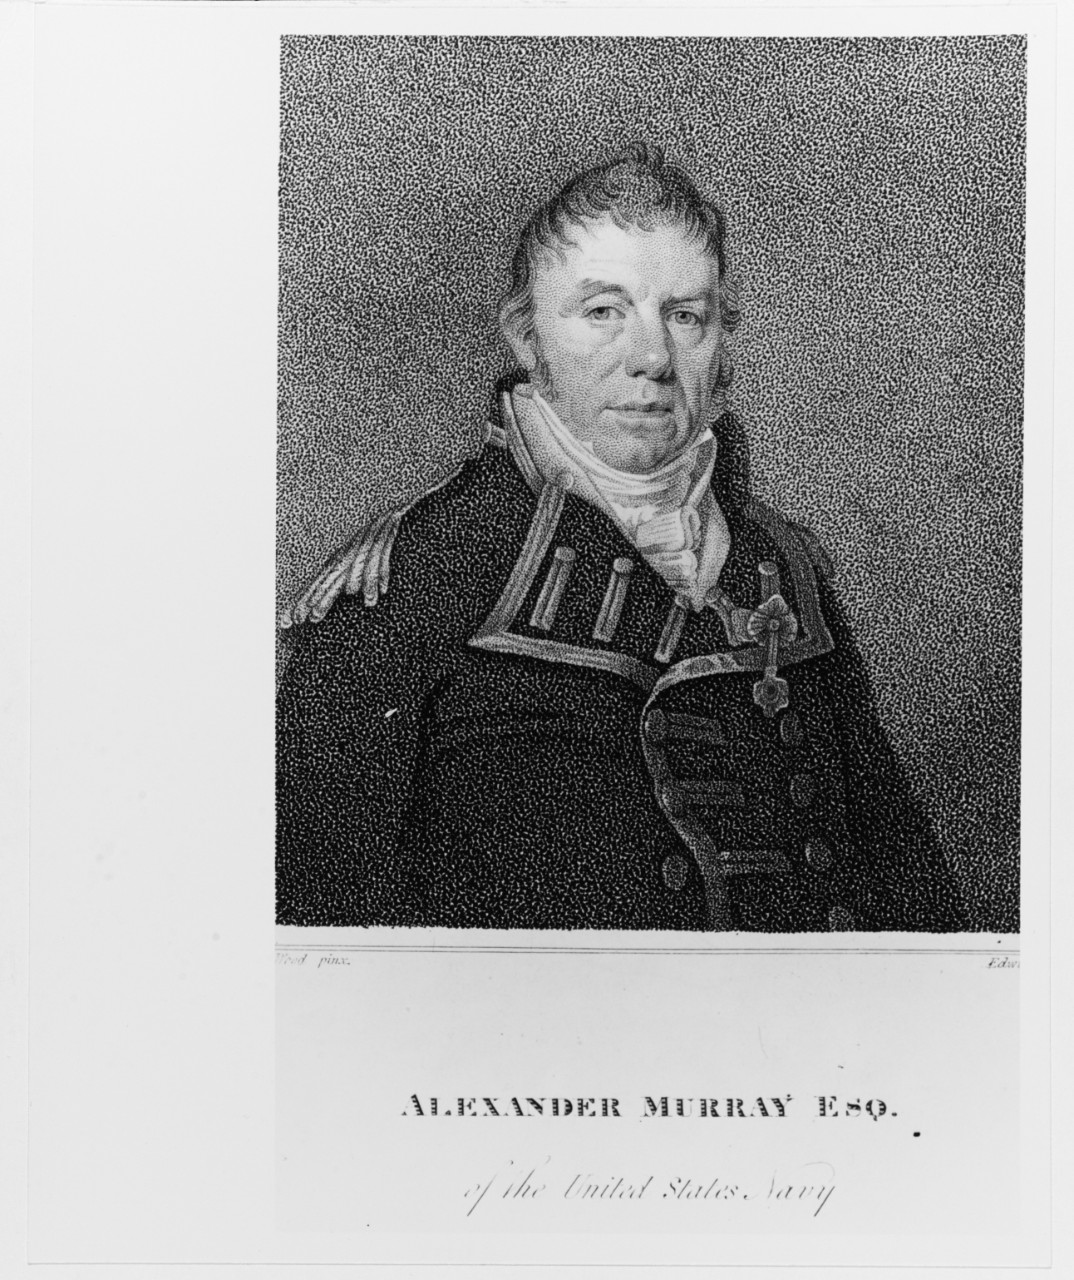 Alexander Murray, USN